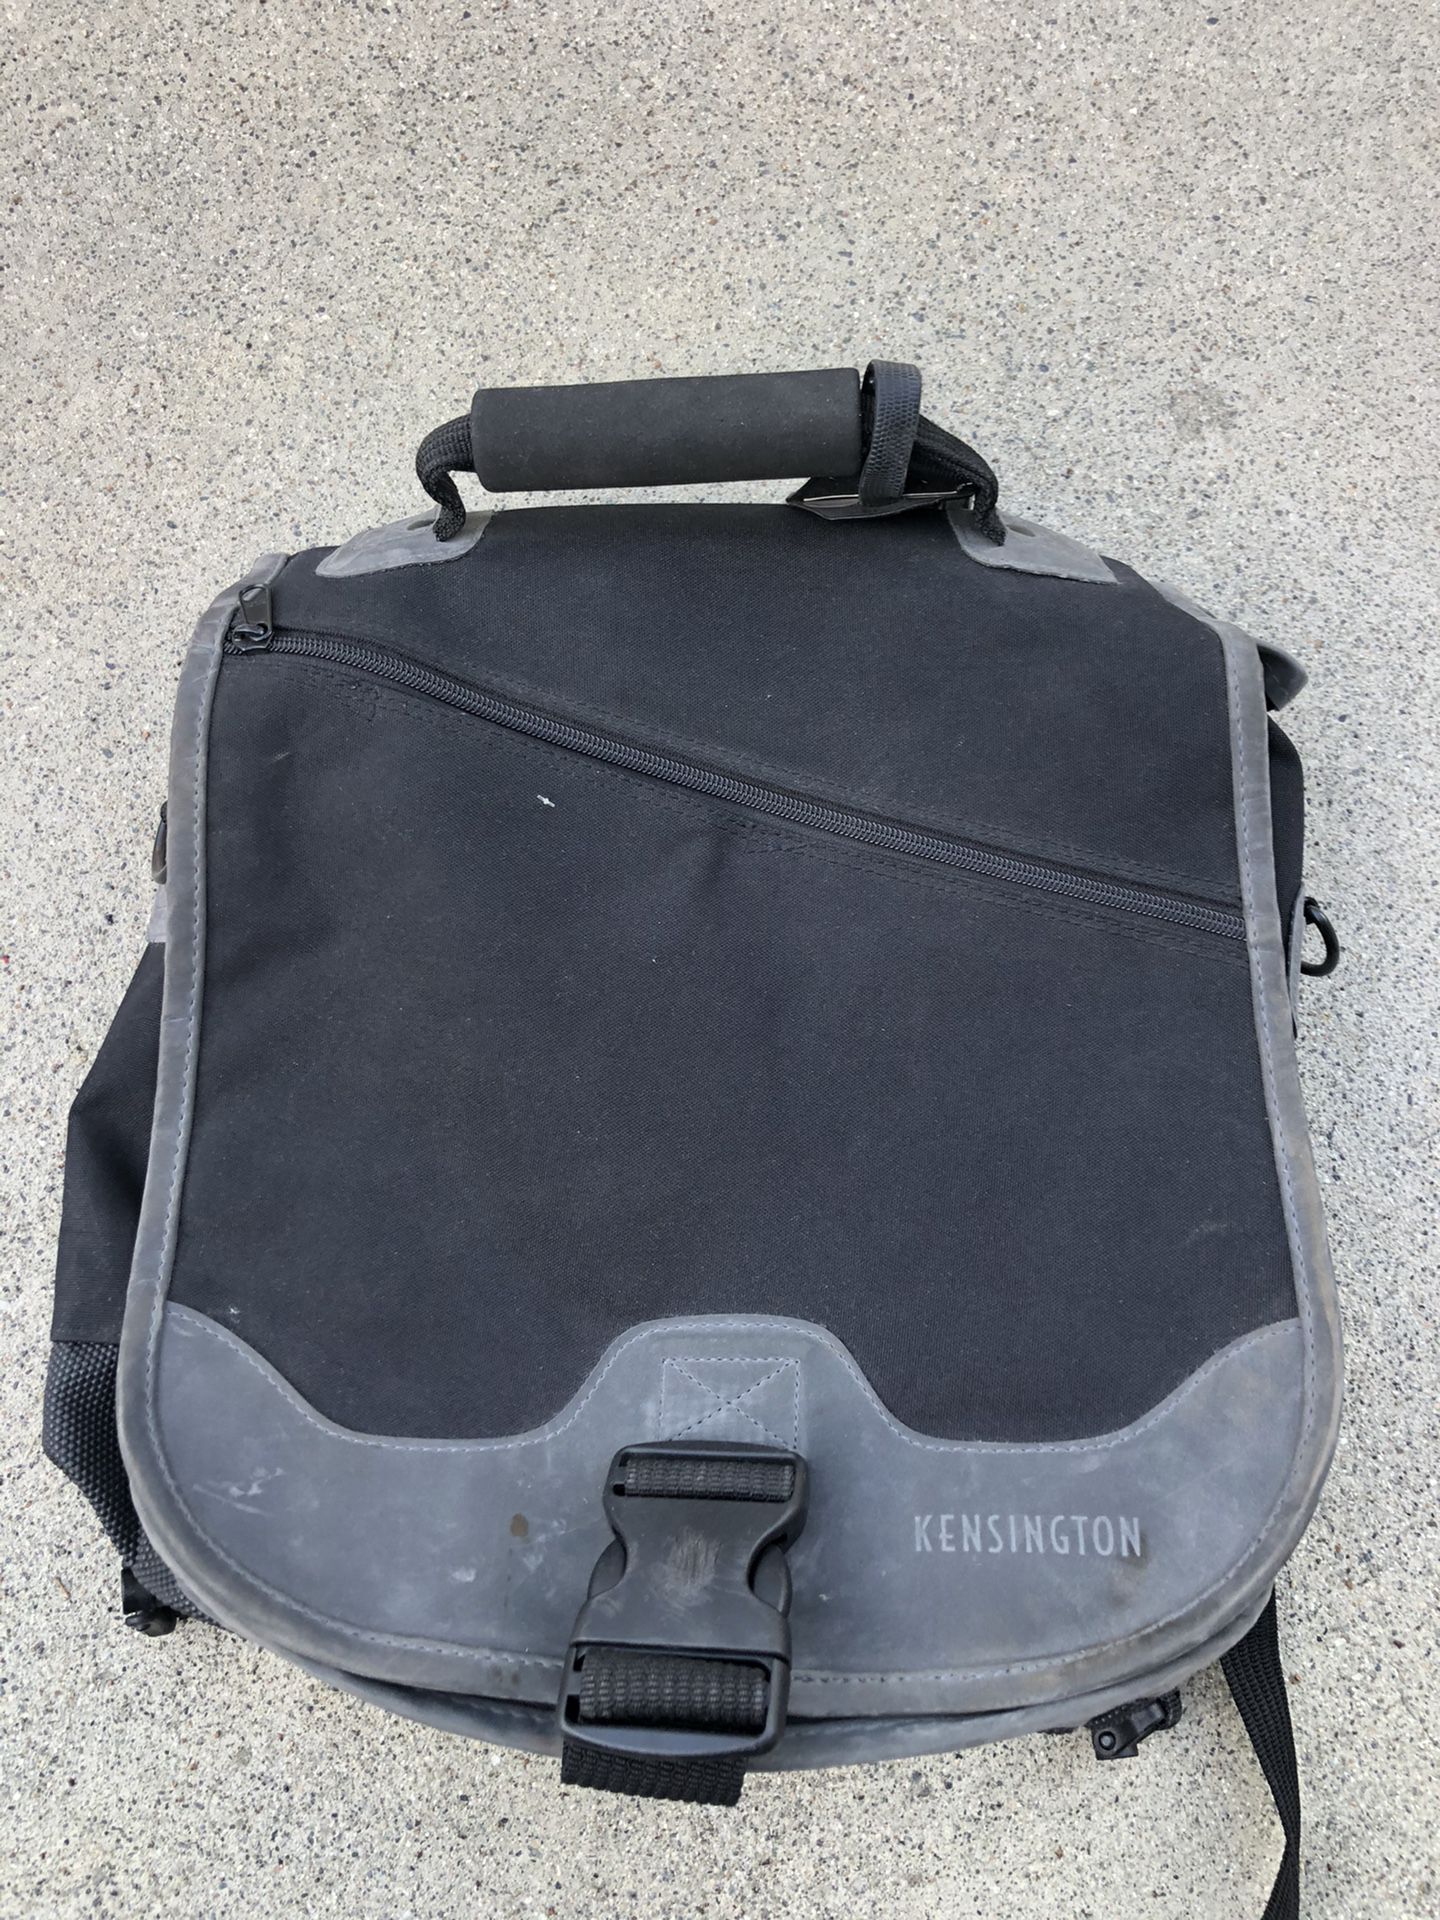 Kensington laptop backpack must sell today make offer